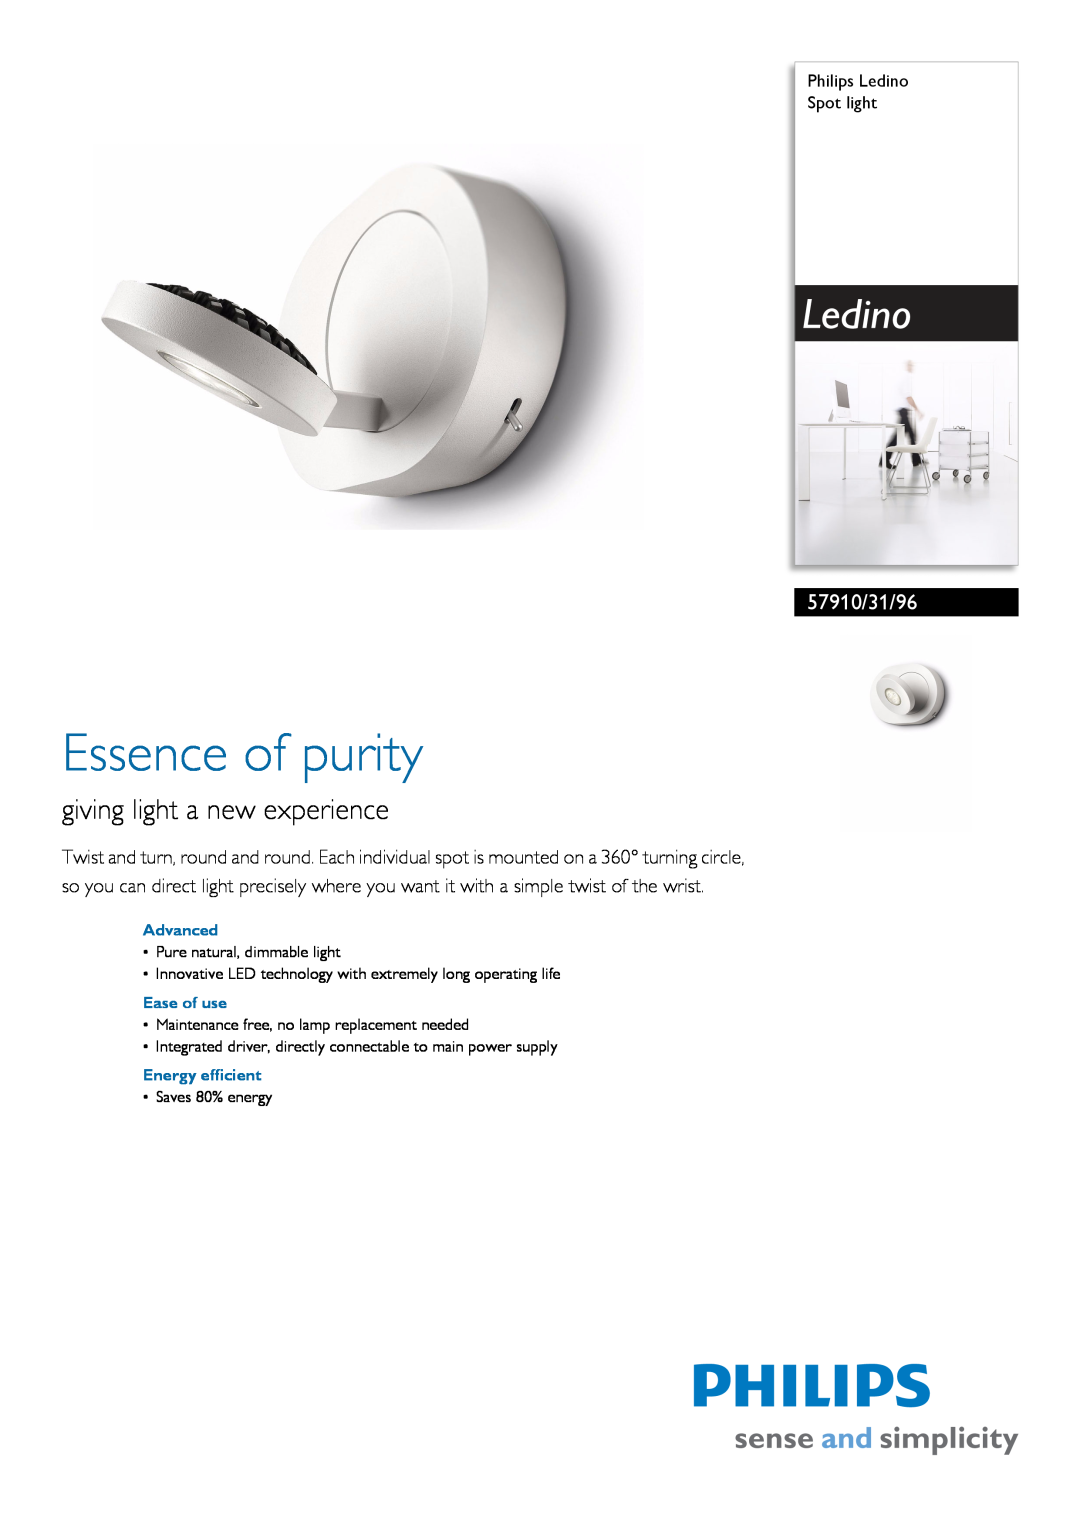 Philips 57910/31/96 manual Philips Ledino Spot light, Advanced, Ease of use, Energy efficient, Essence of purity 